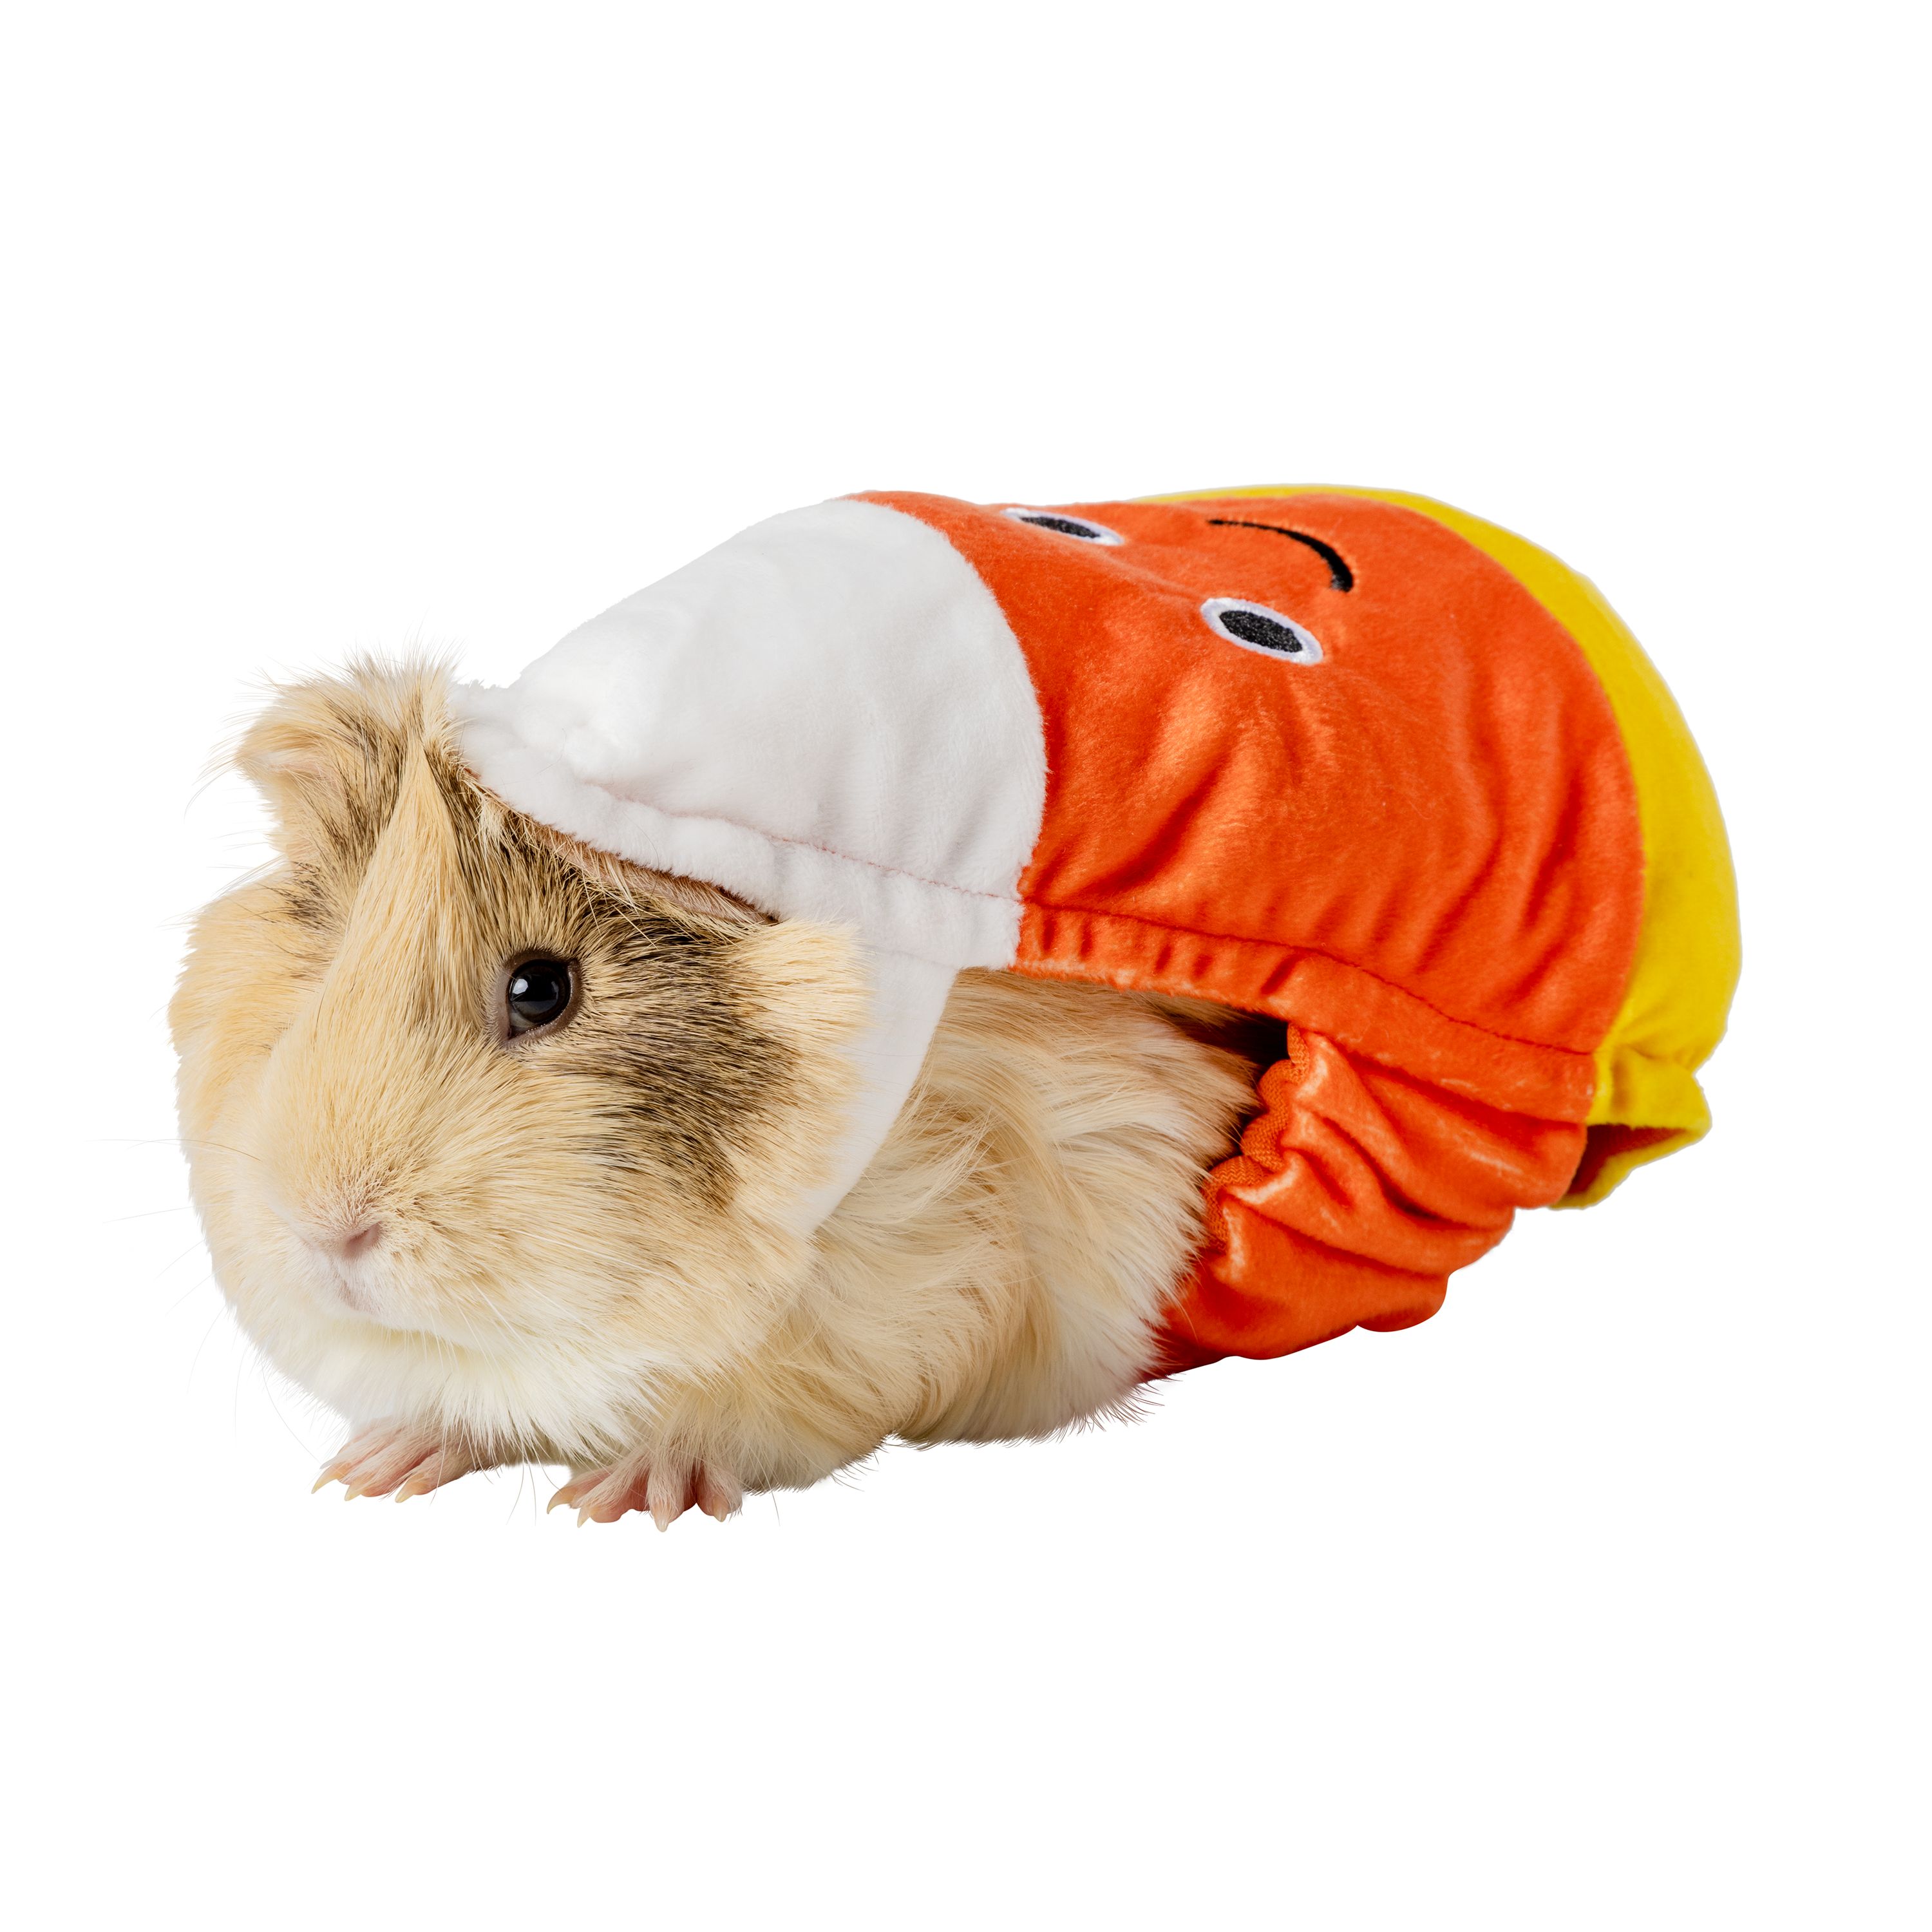 PetSmart has an adorable line of guinea pig Halloween costumes